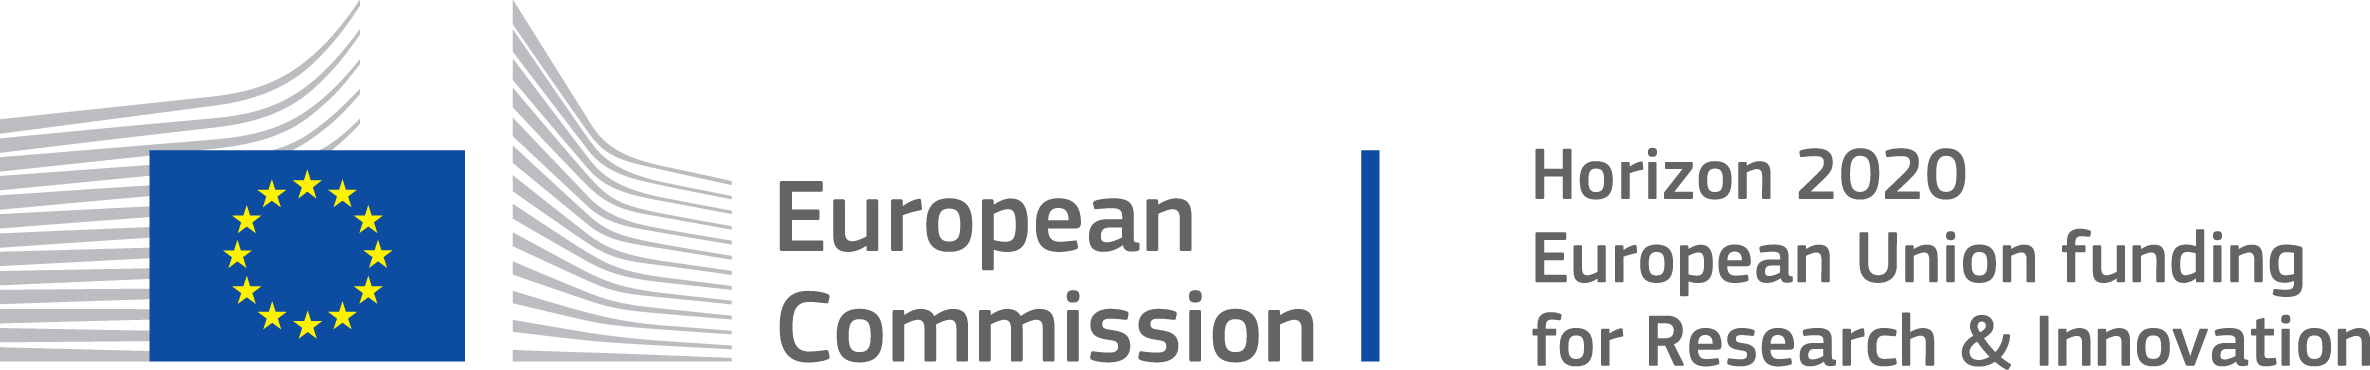 European Commission H2020 program logo